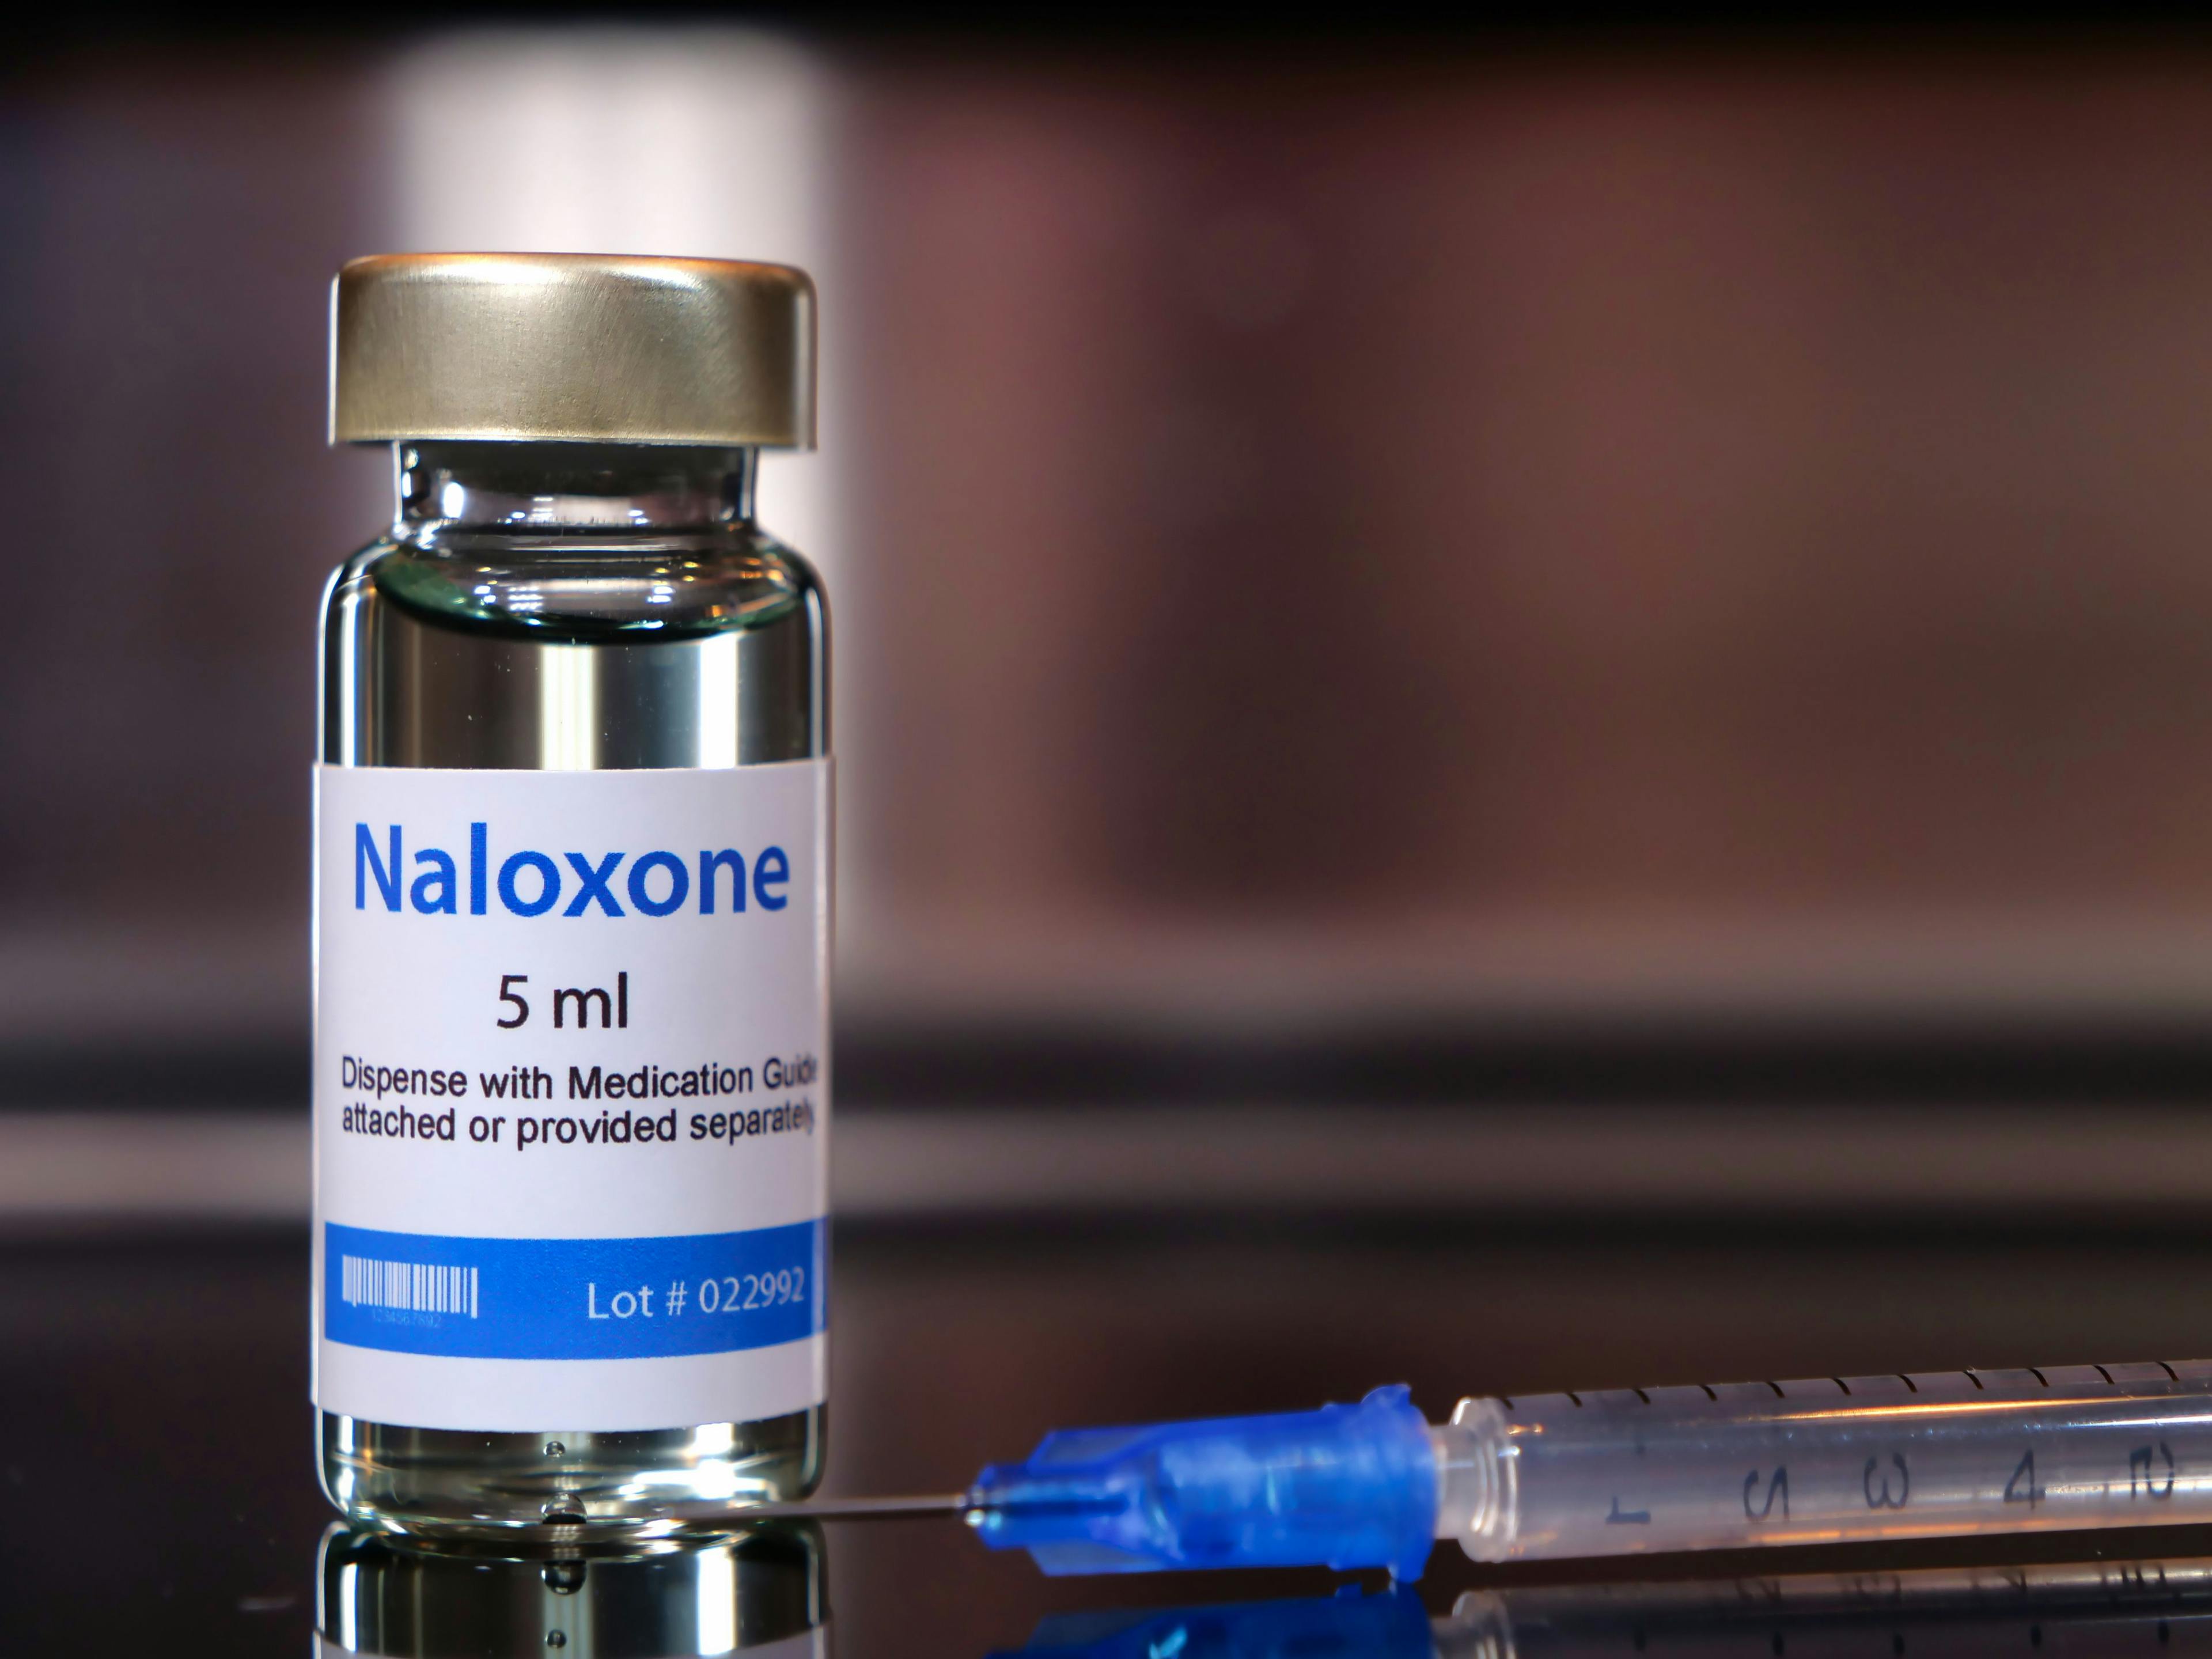 Vial of naloxone with syringe | Image credit: Bernard Chantal - stock.adobe.com